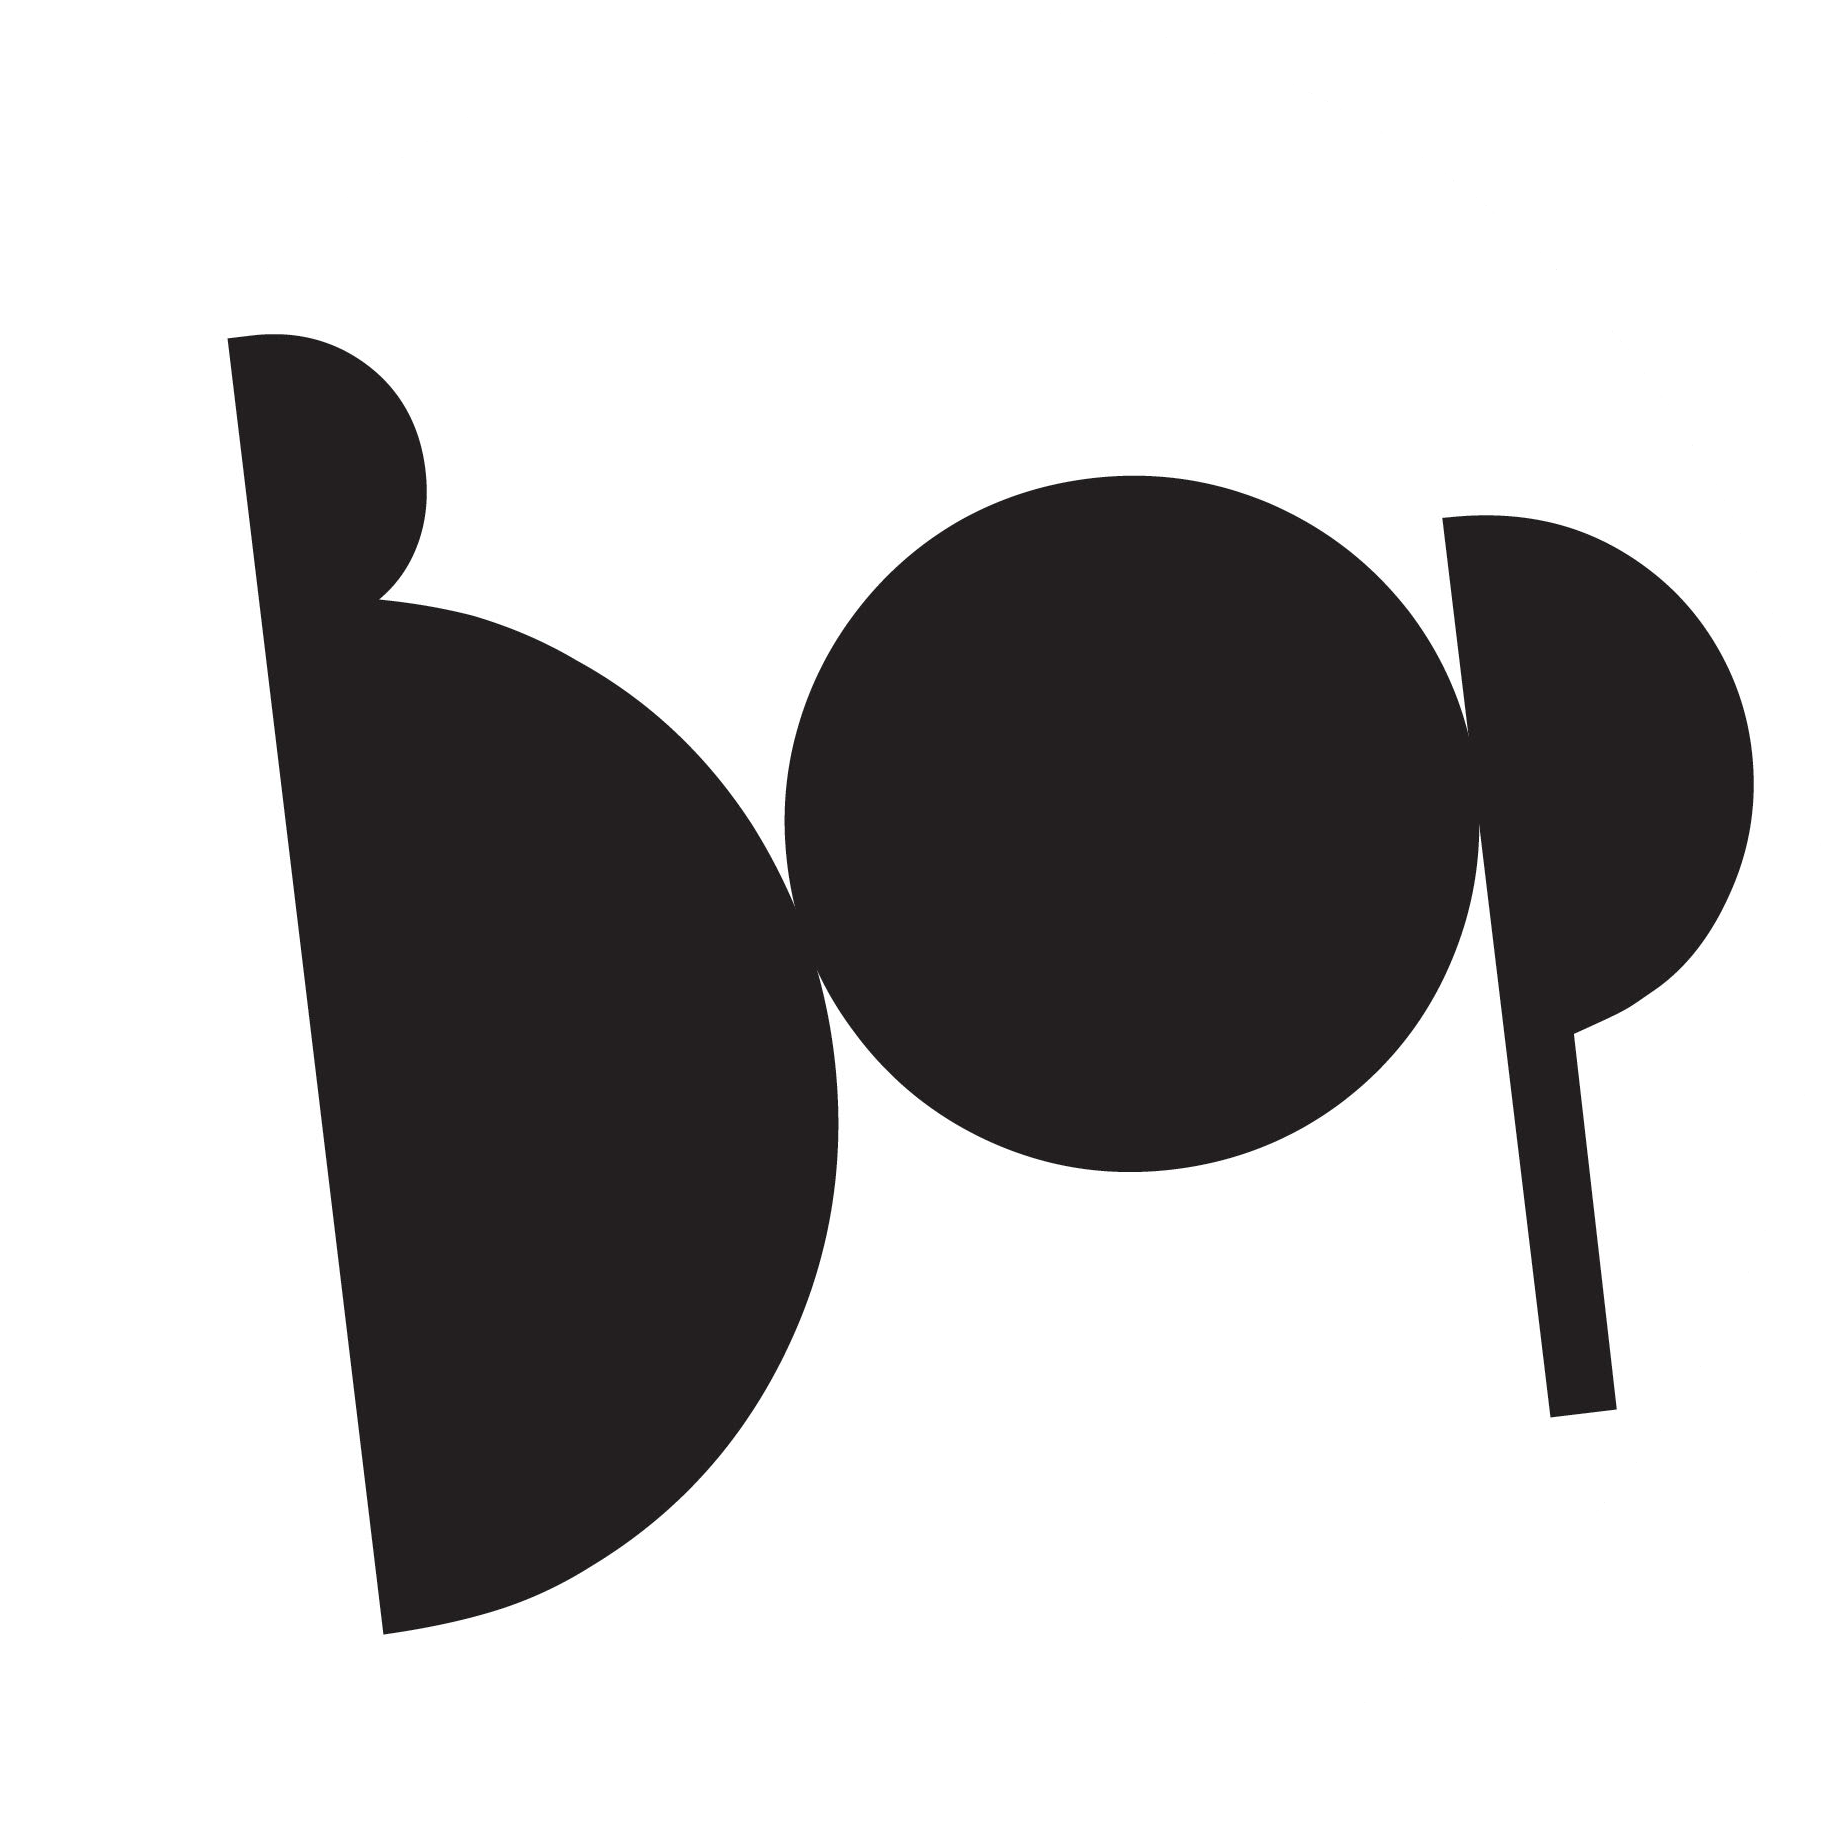 Bop - Clip Art Library